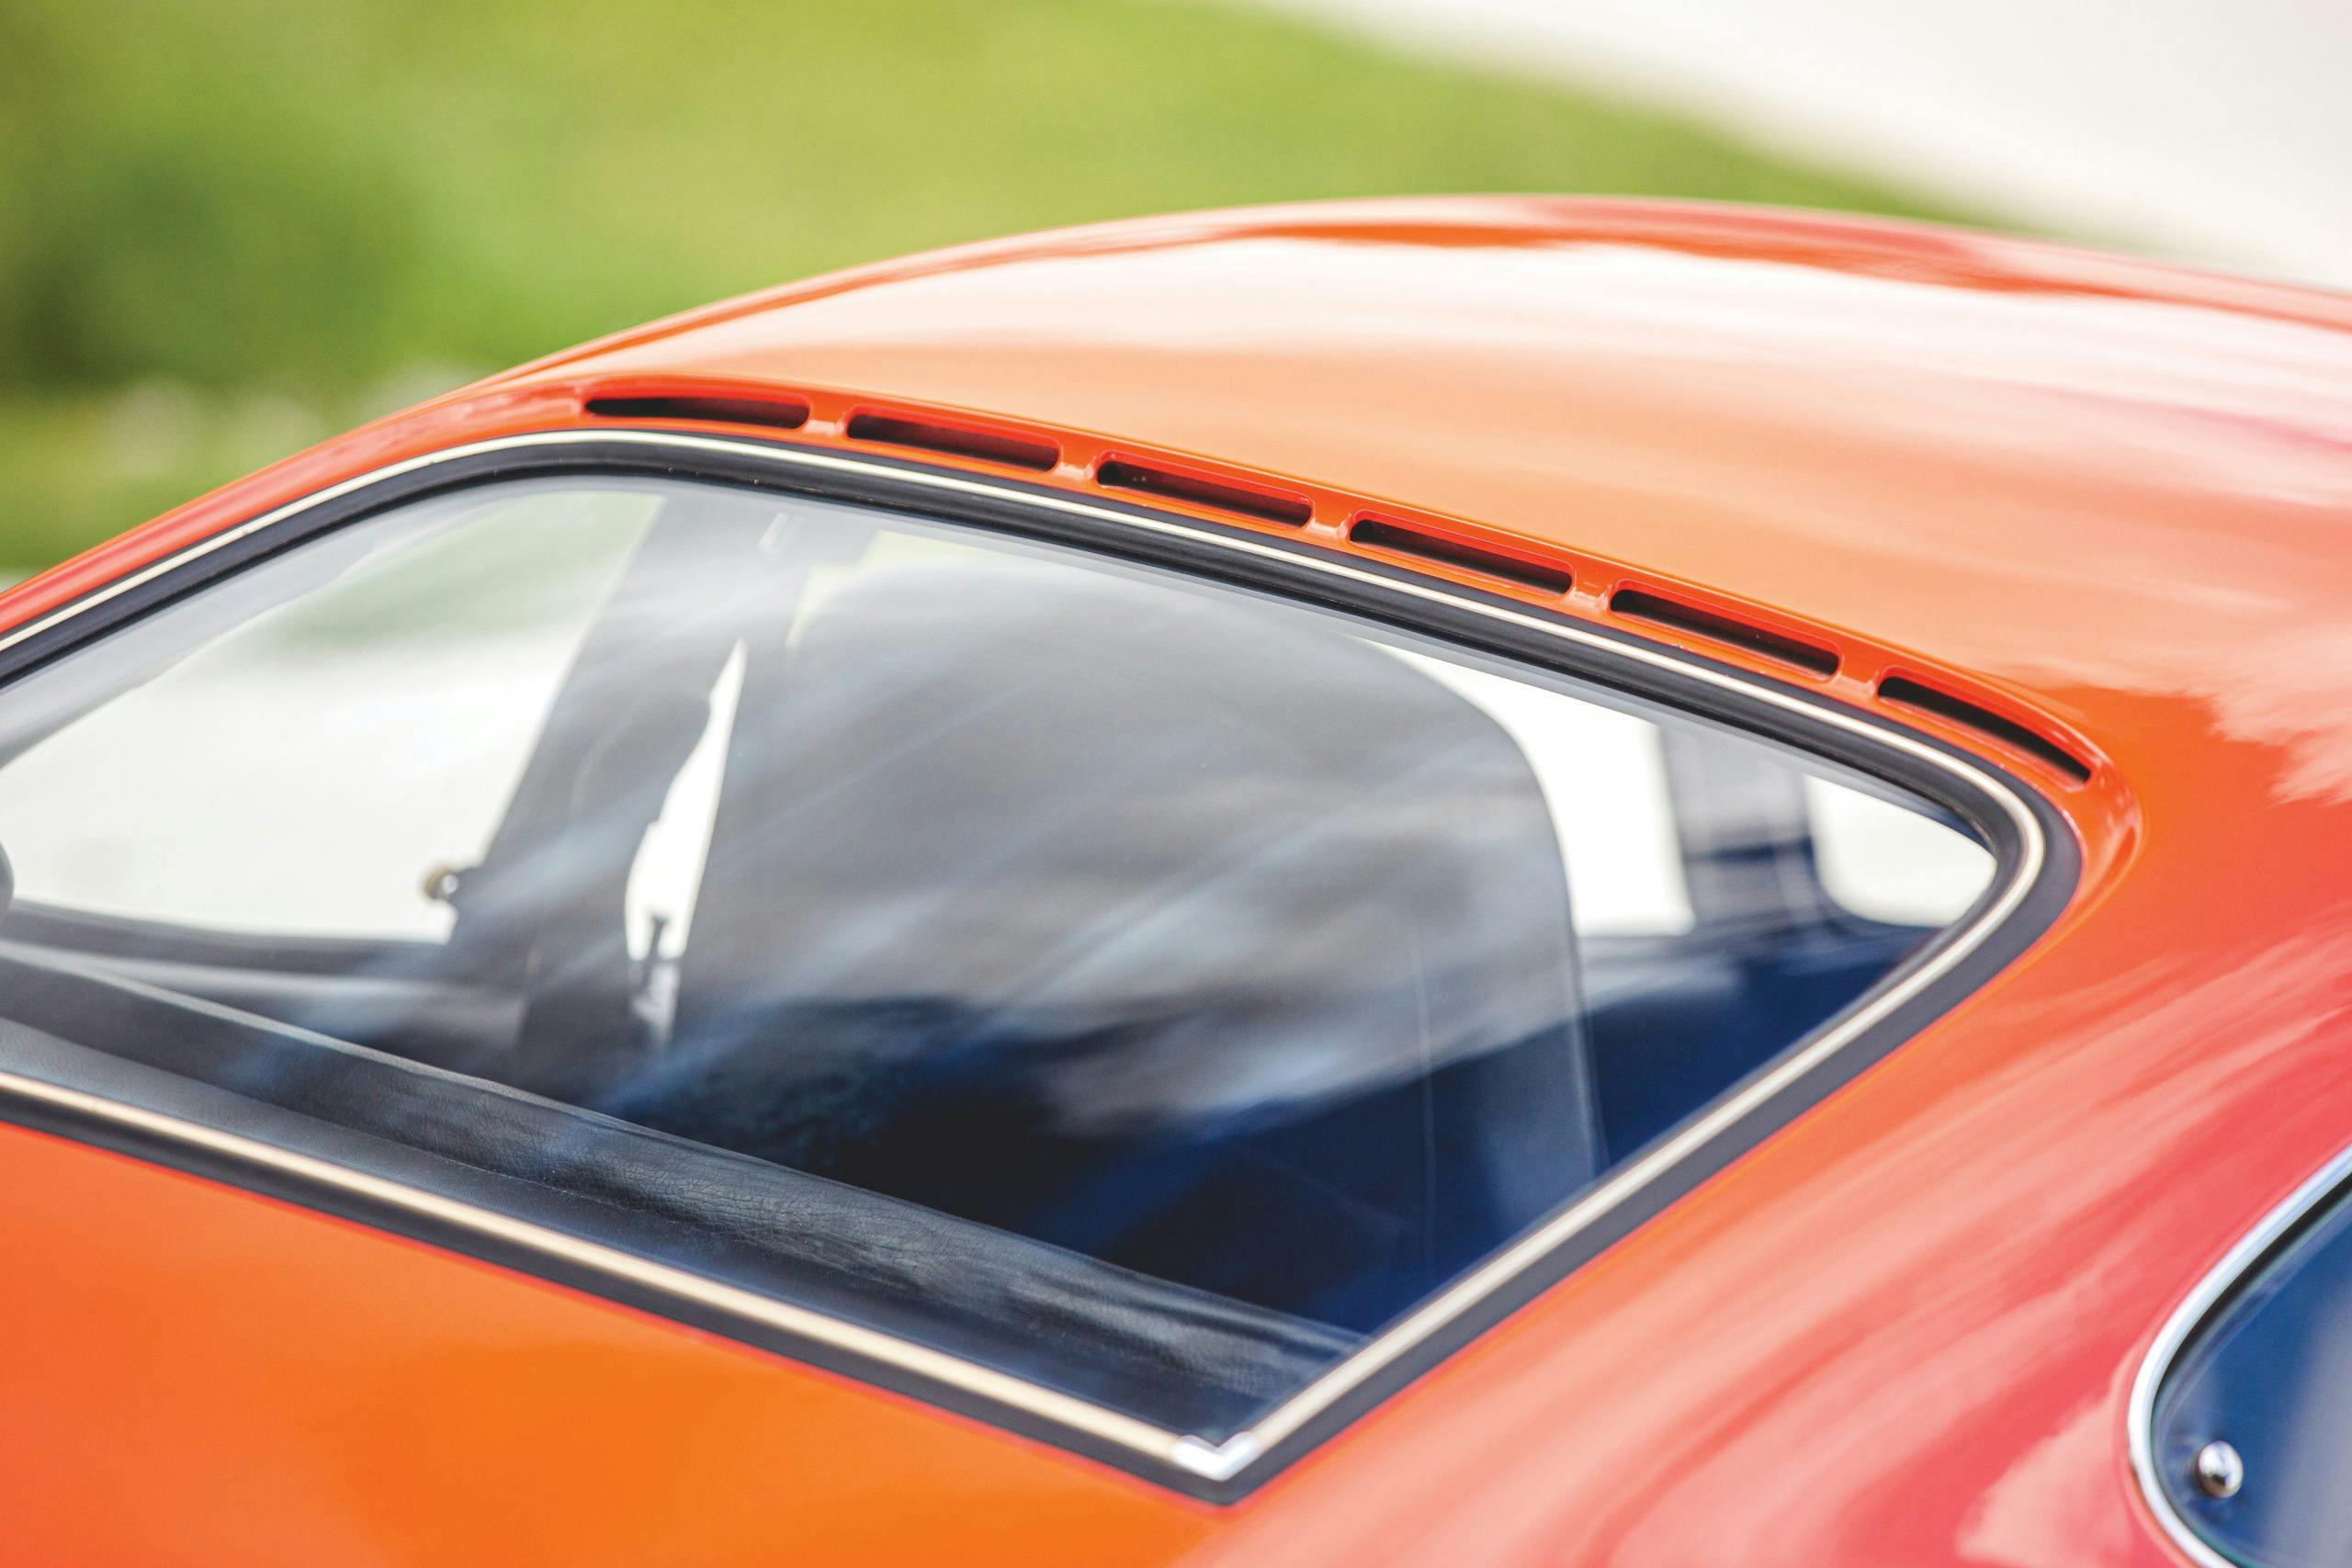 1973 Opel GT roof vent windows